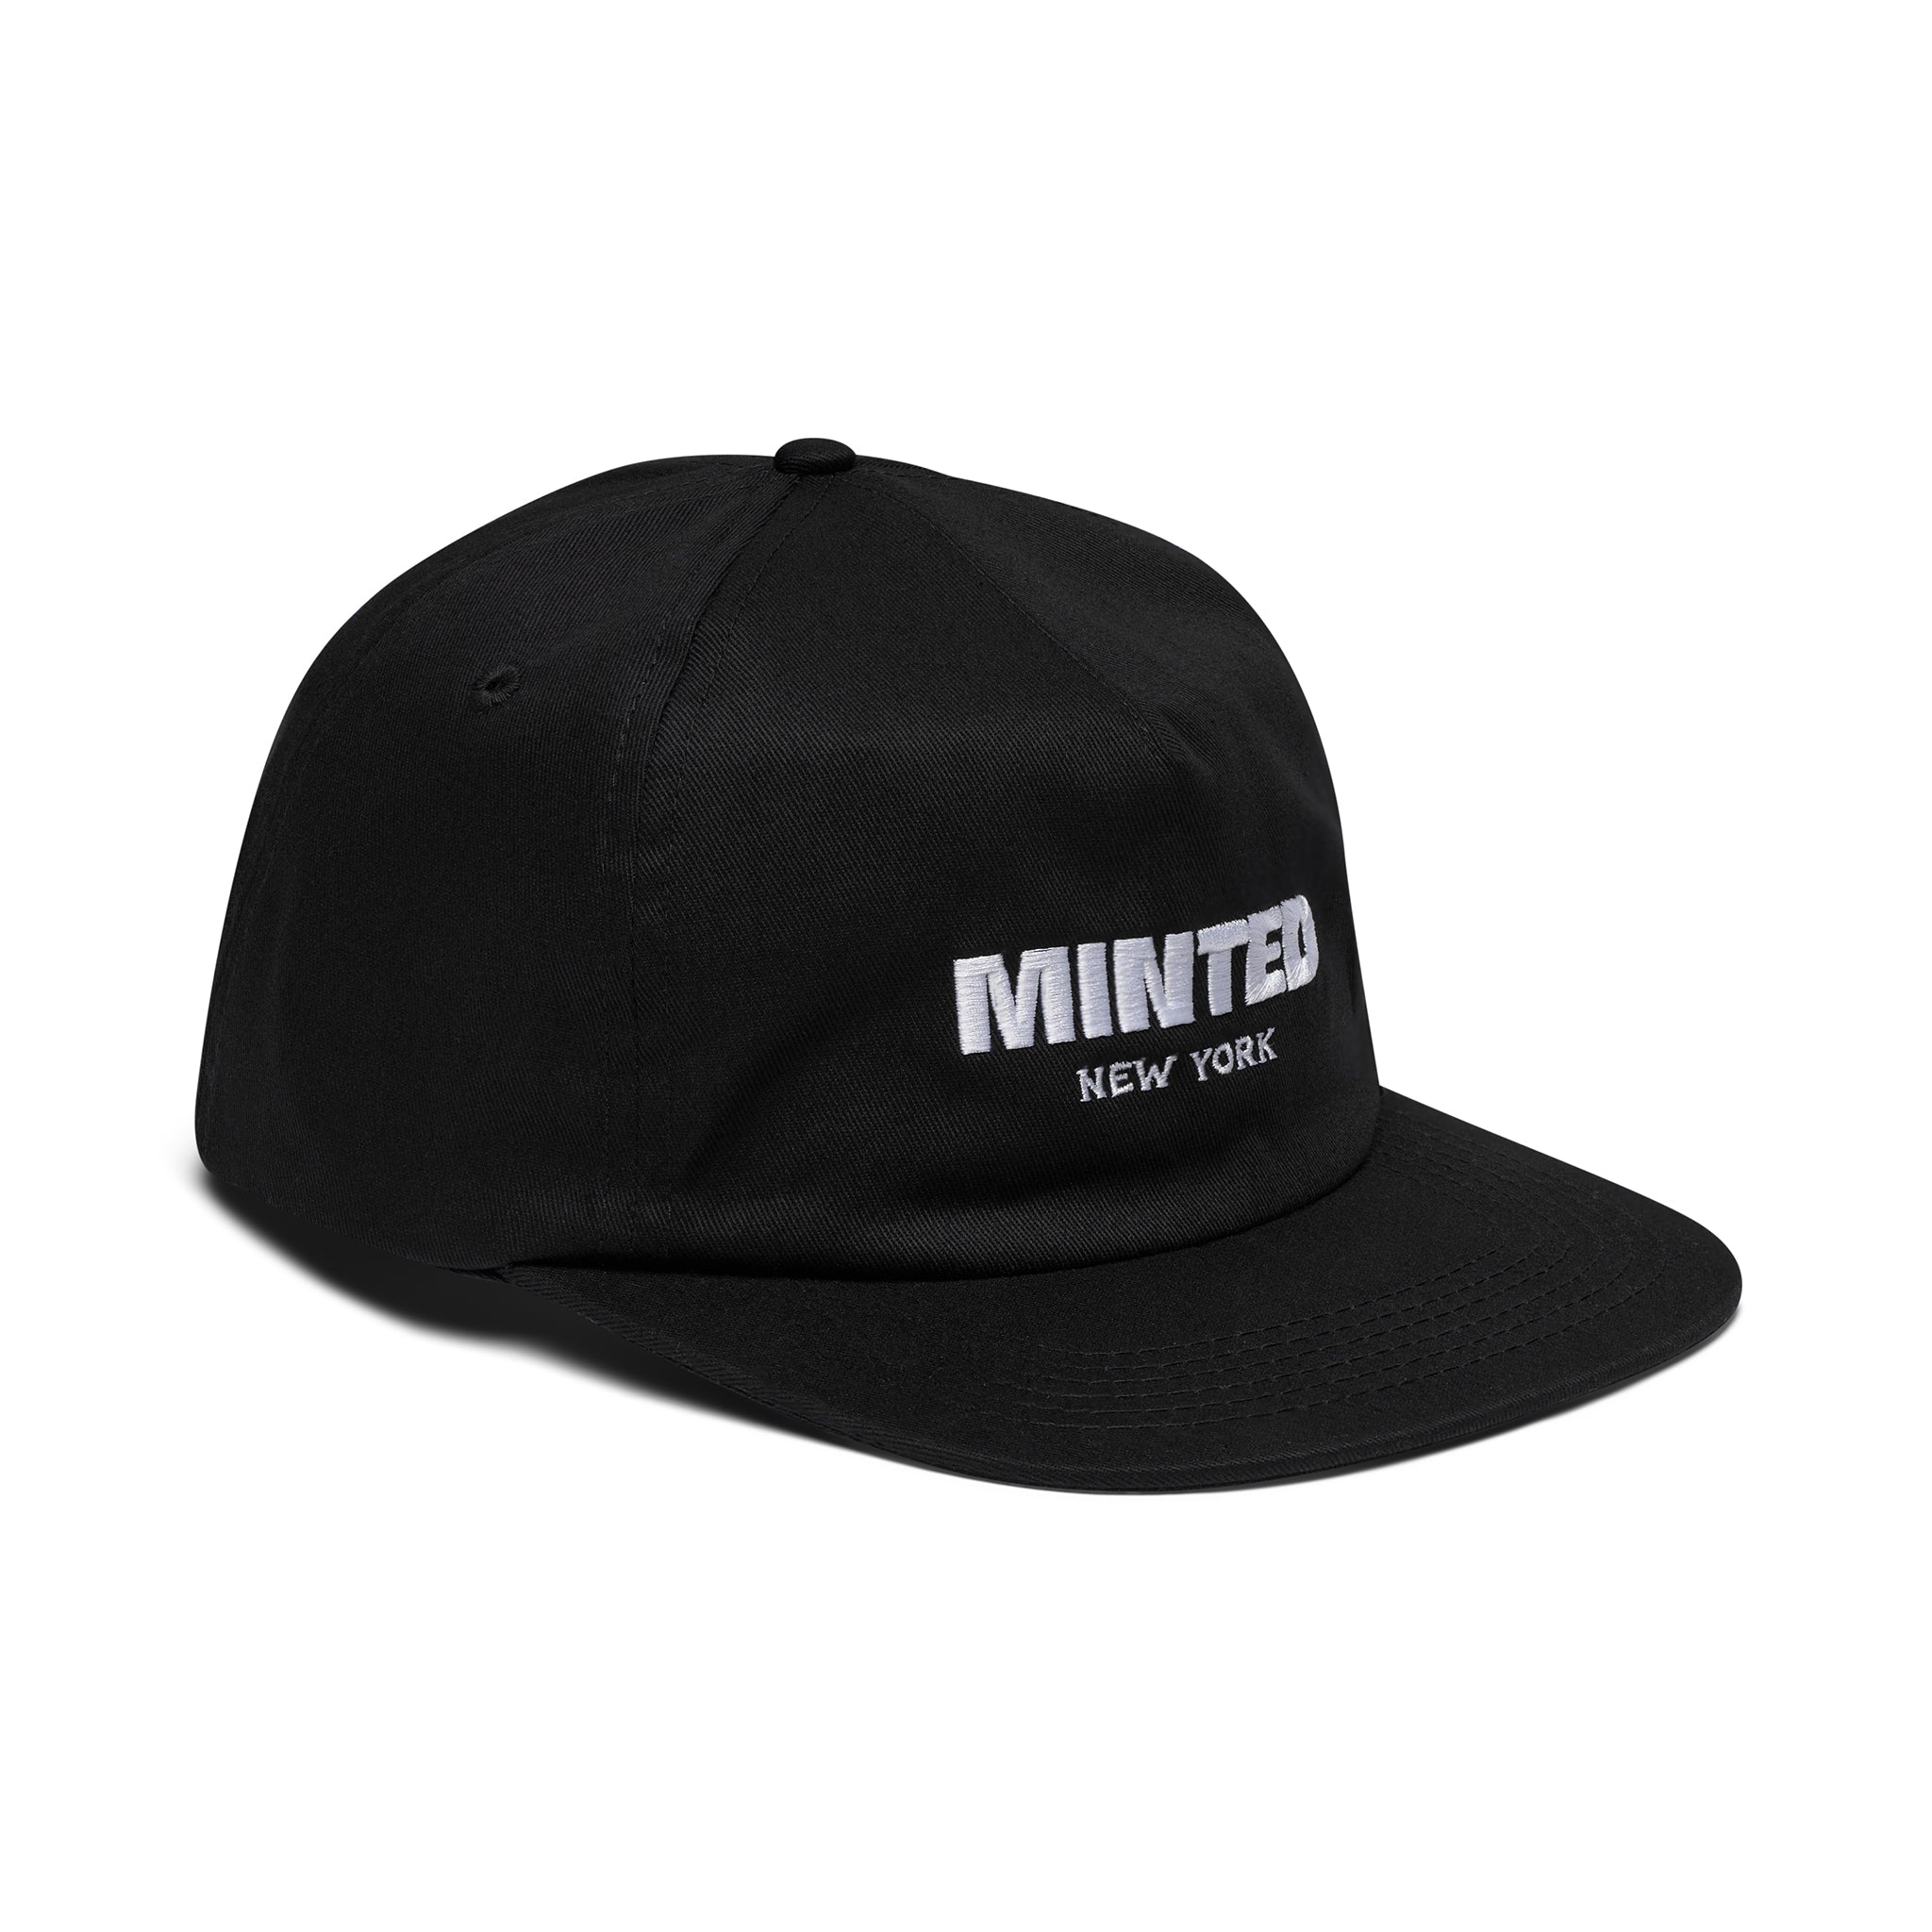 Black Work Hat - Minted New York